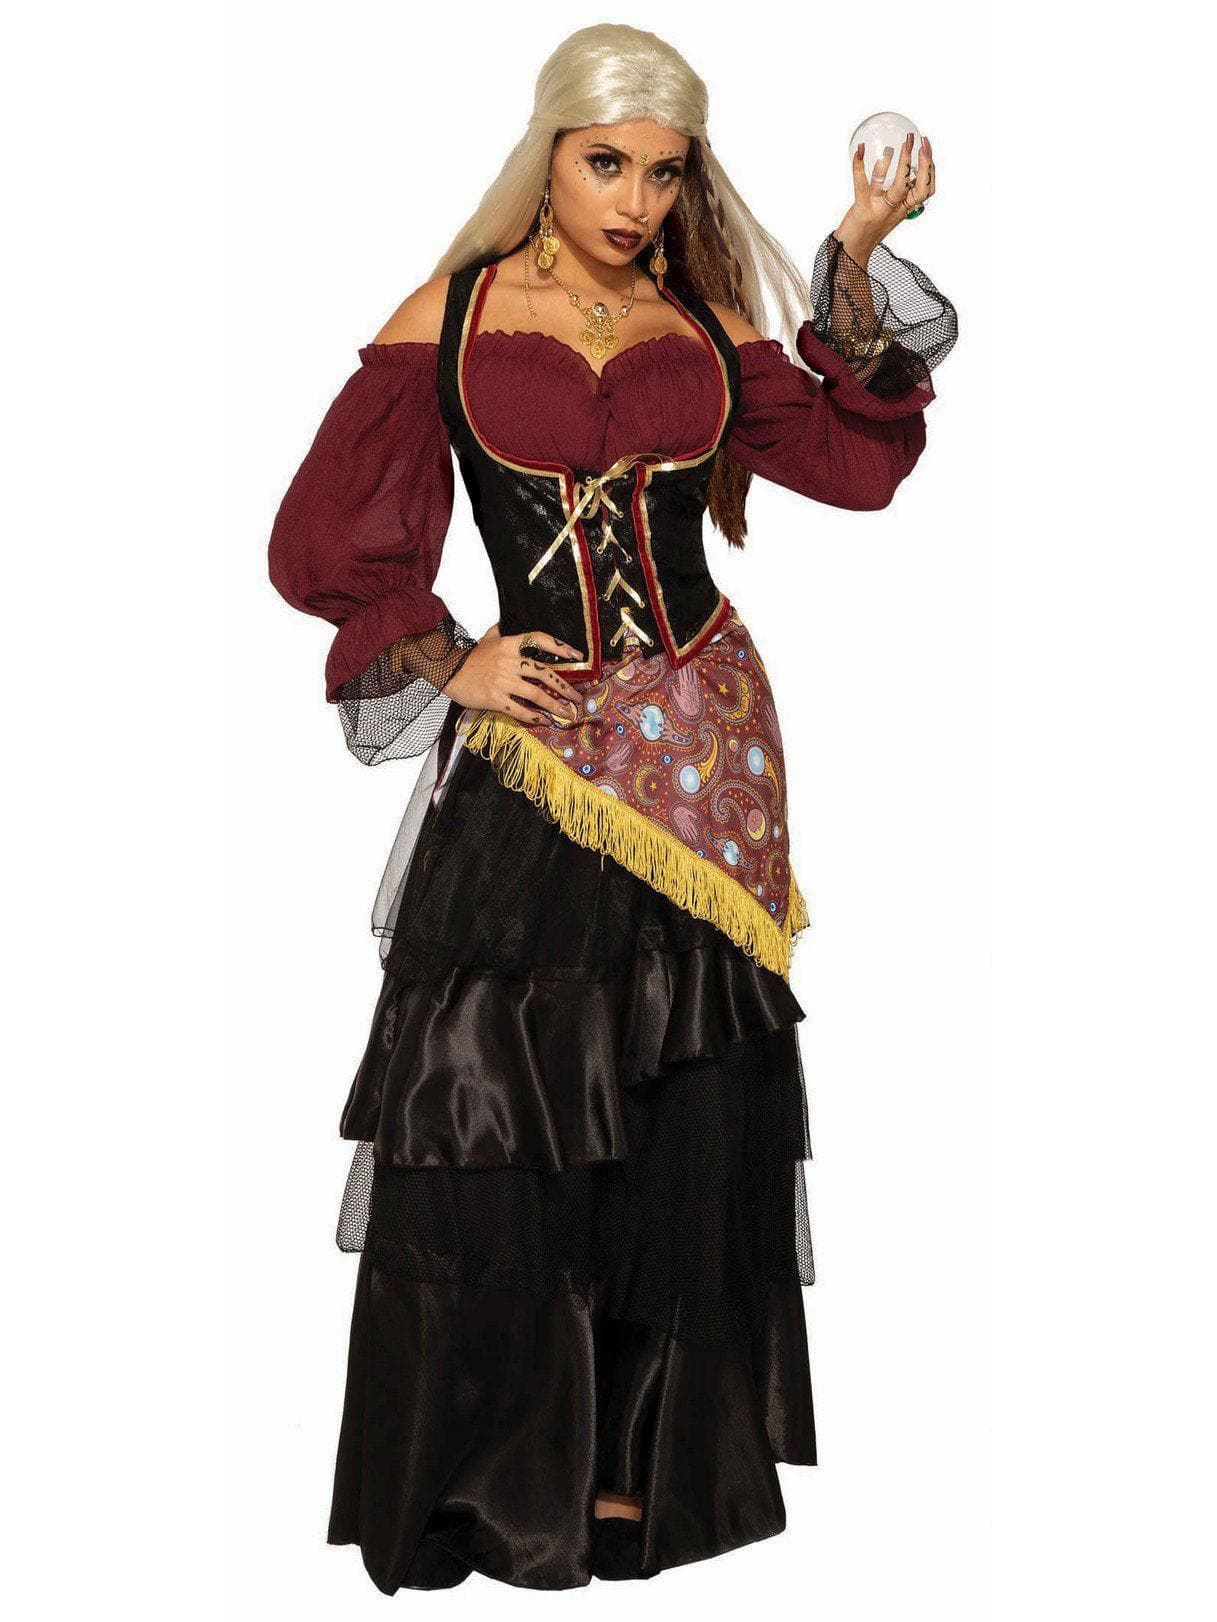 gypsy fortune teller costume ideas